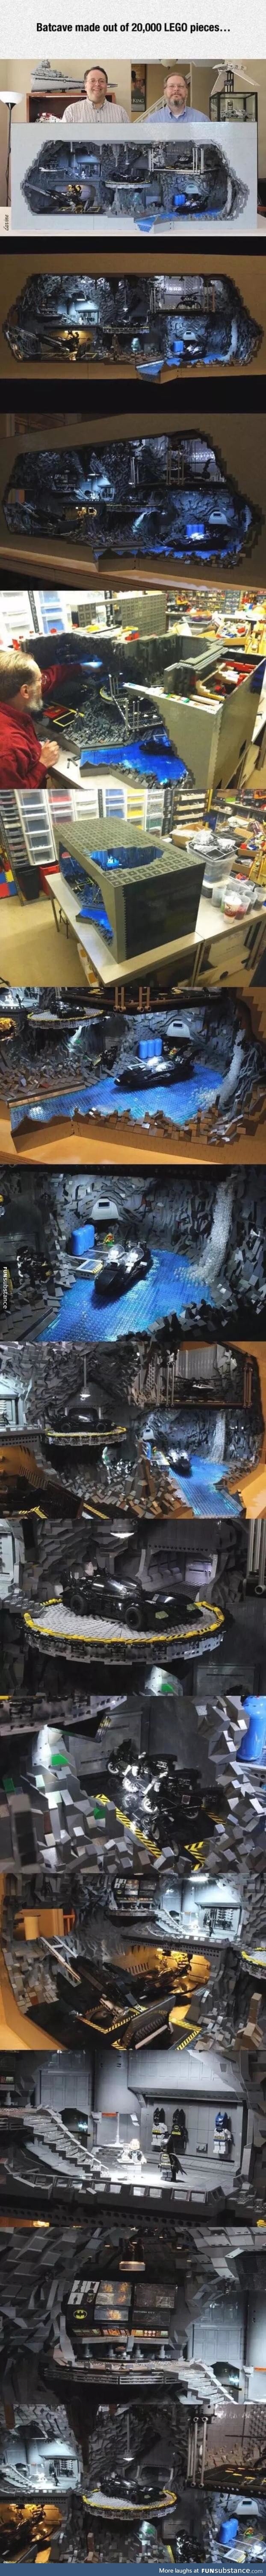 Epic Lego batcave